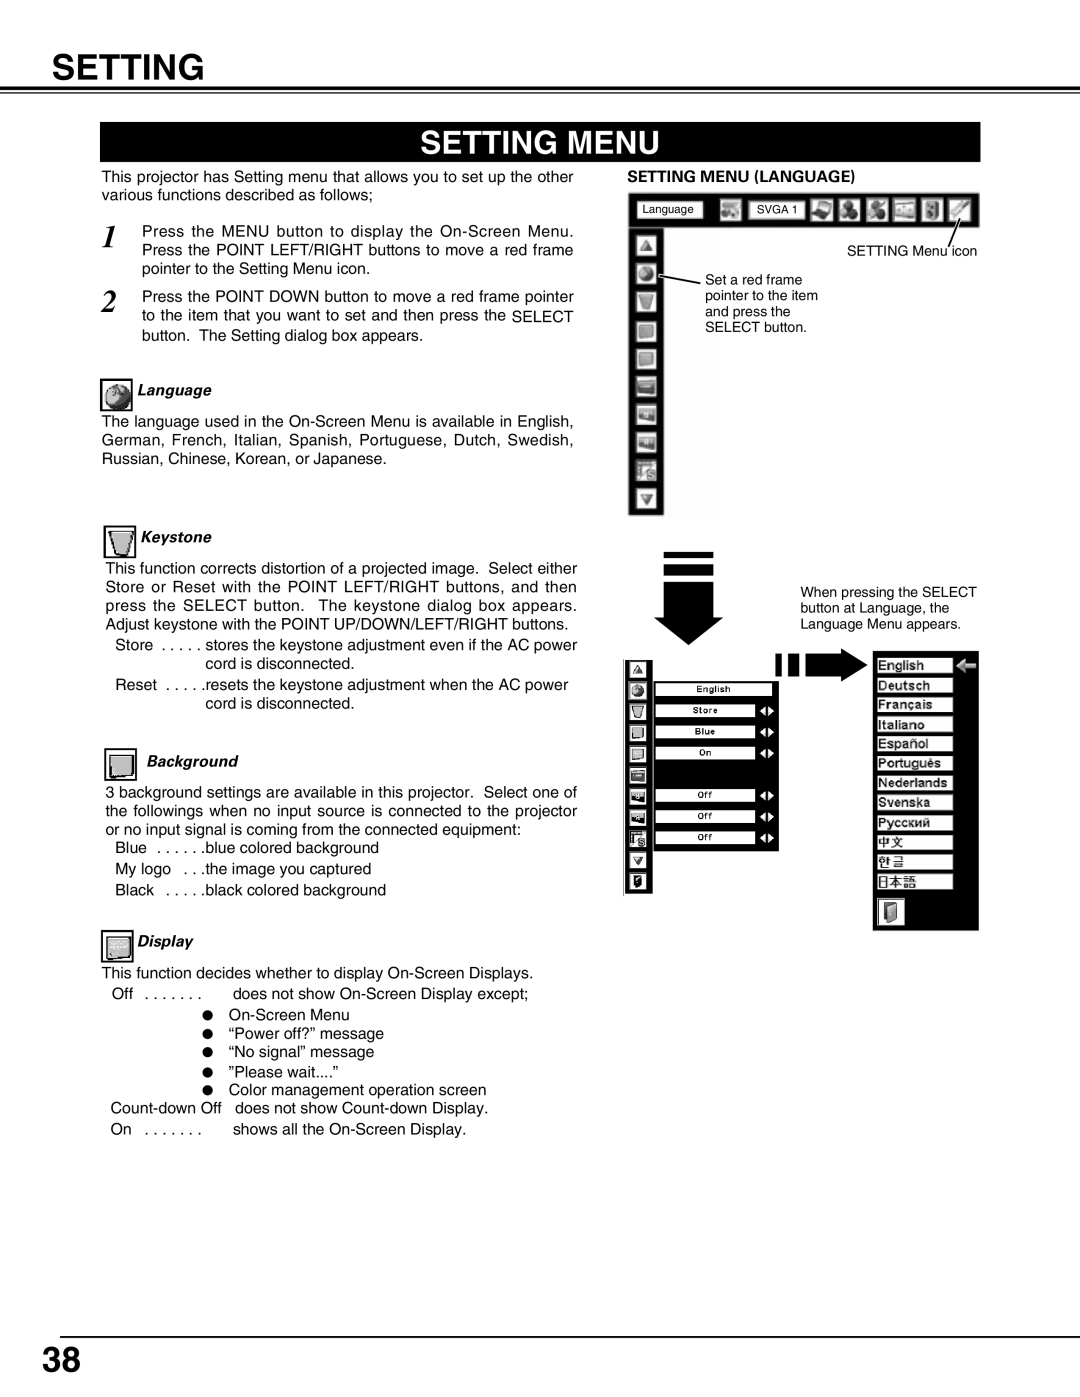 Eiki LC-W3 instruction manual Keystone, Background, Display, Setting Menu Language 